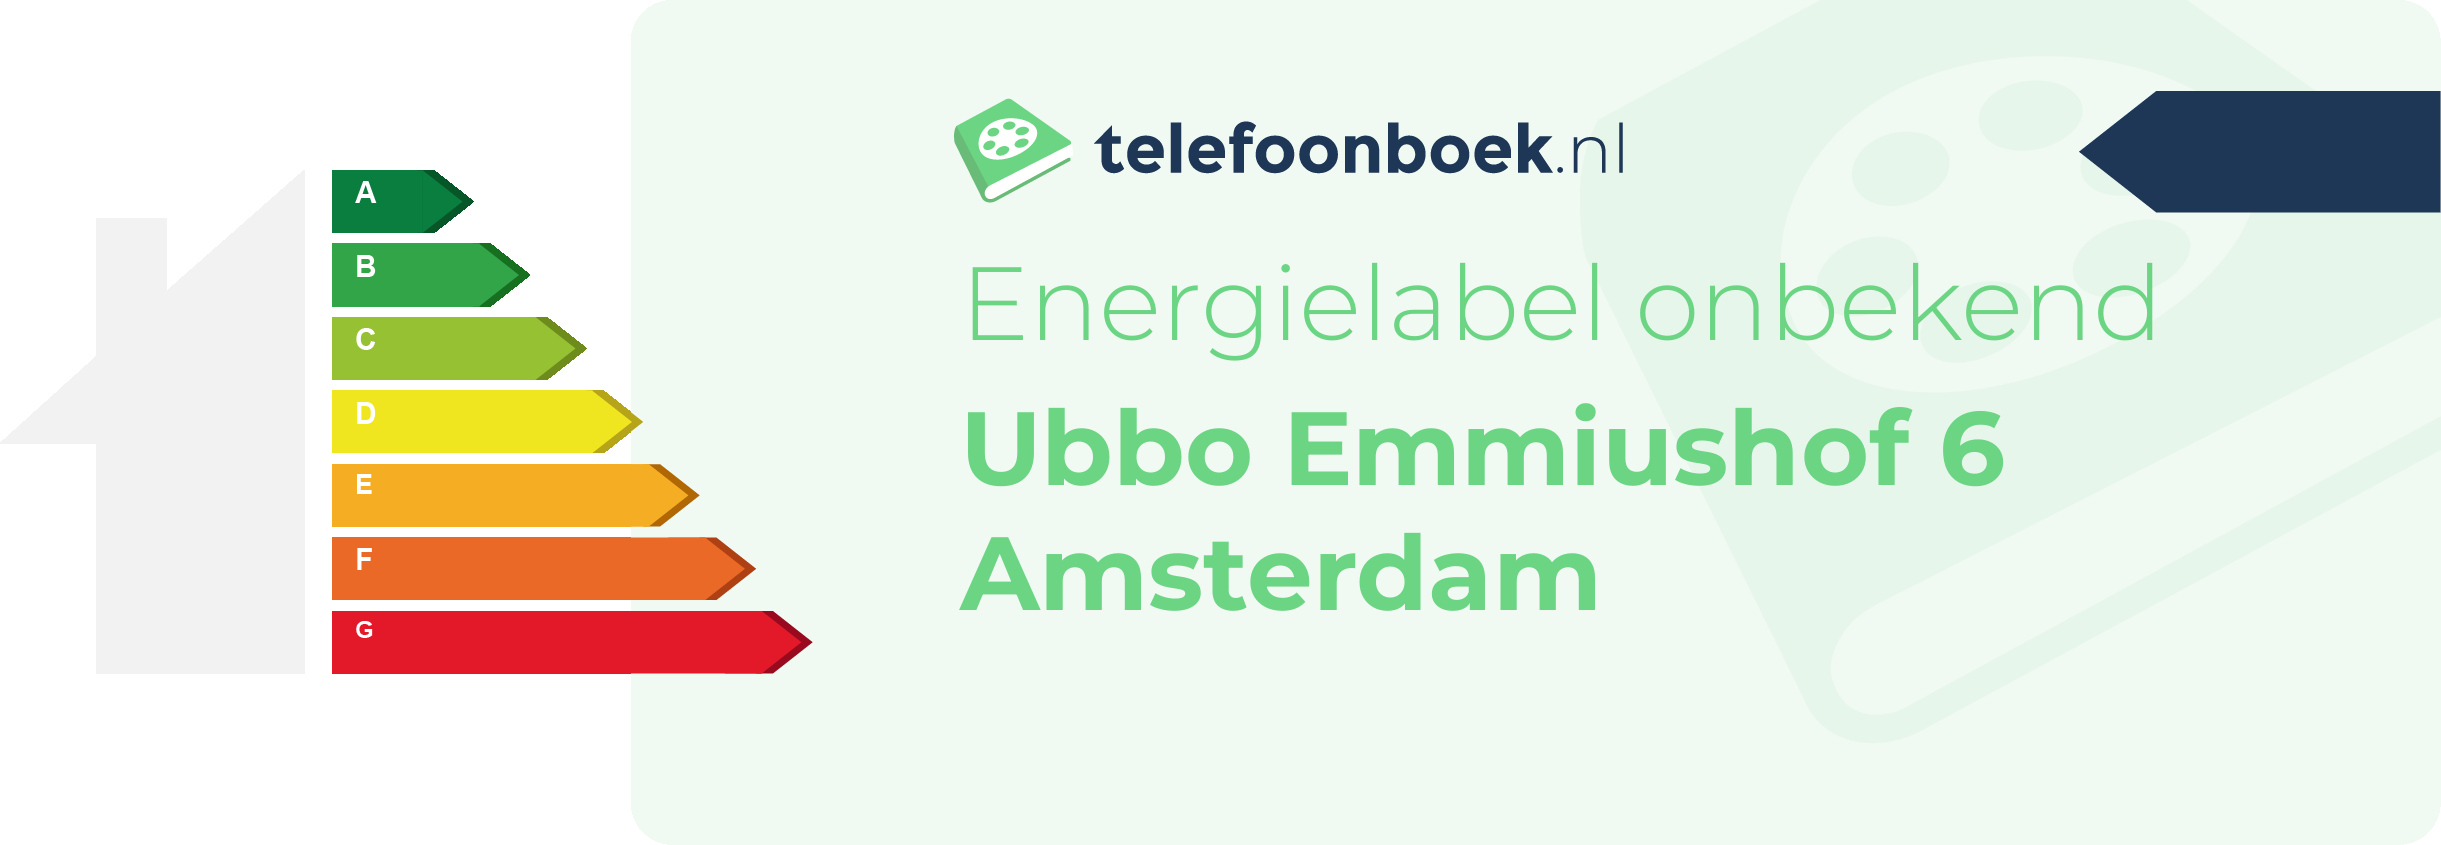 Energielabel Ubbo Emmiushof 6 Amsterdam